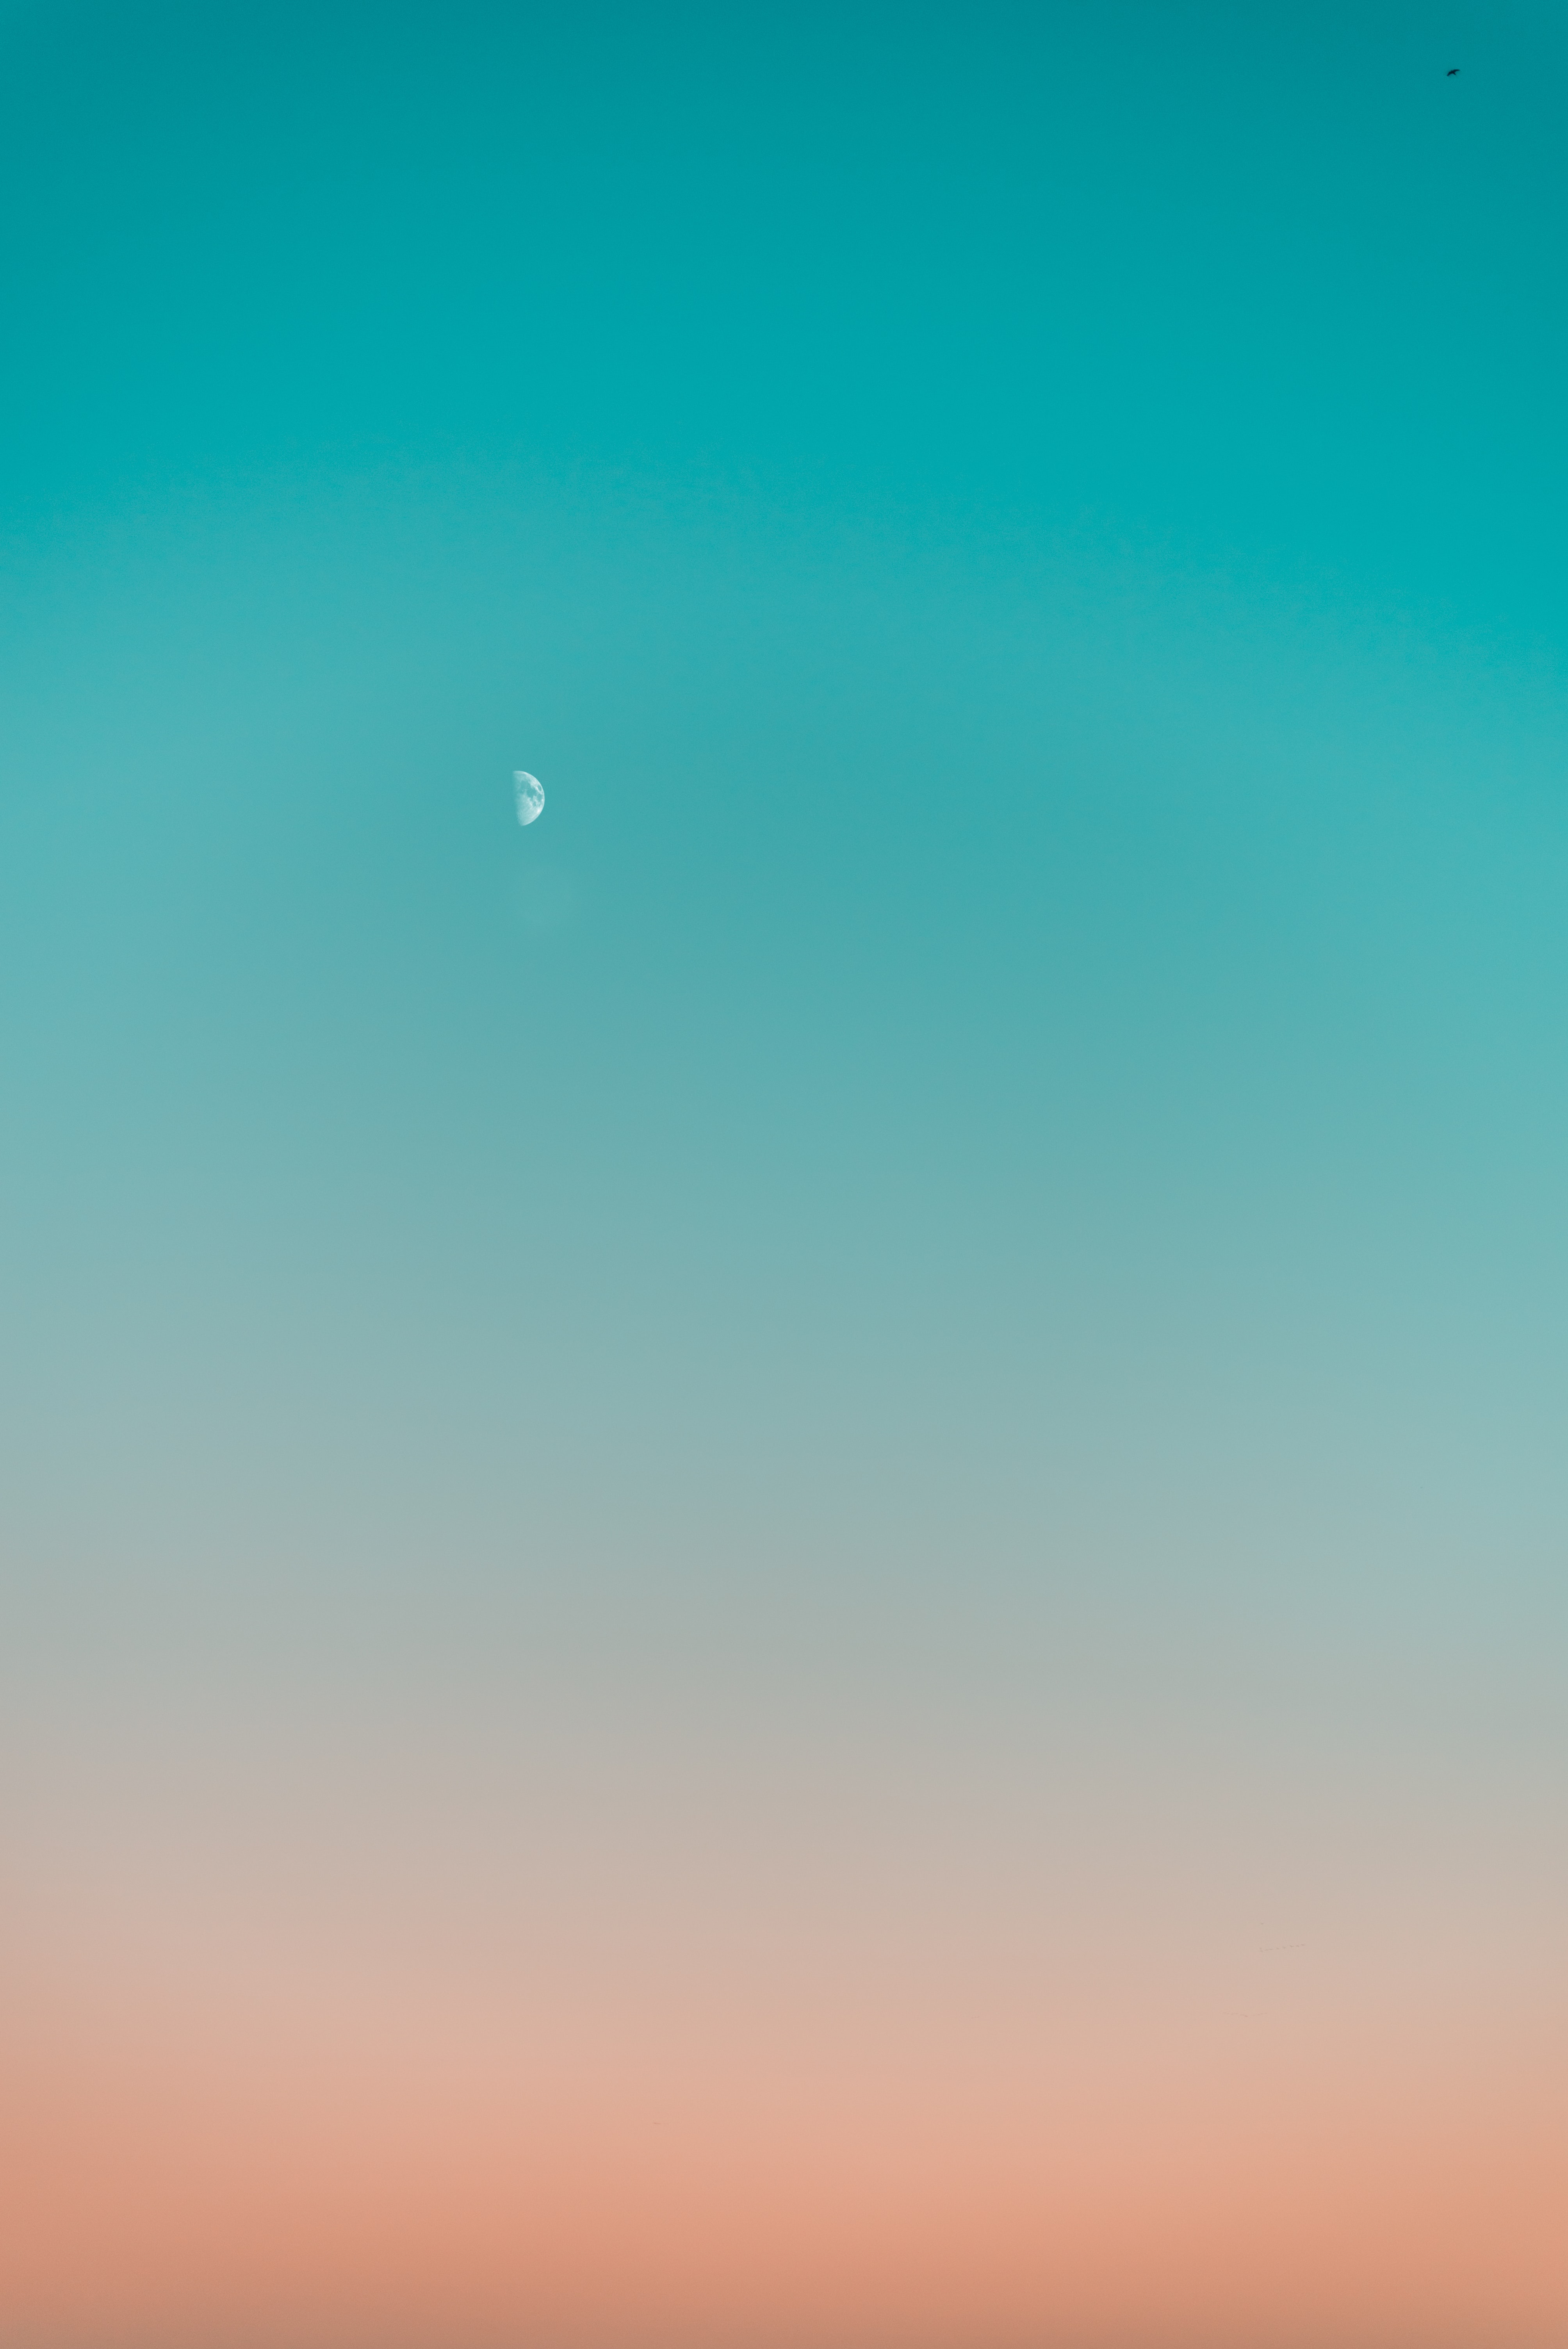 1080p pic moon, sky, nature, minimalism